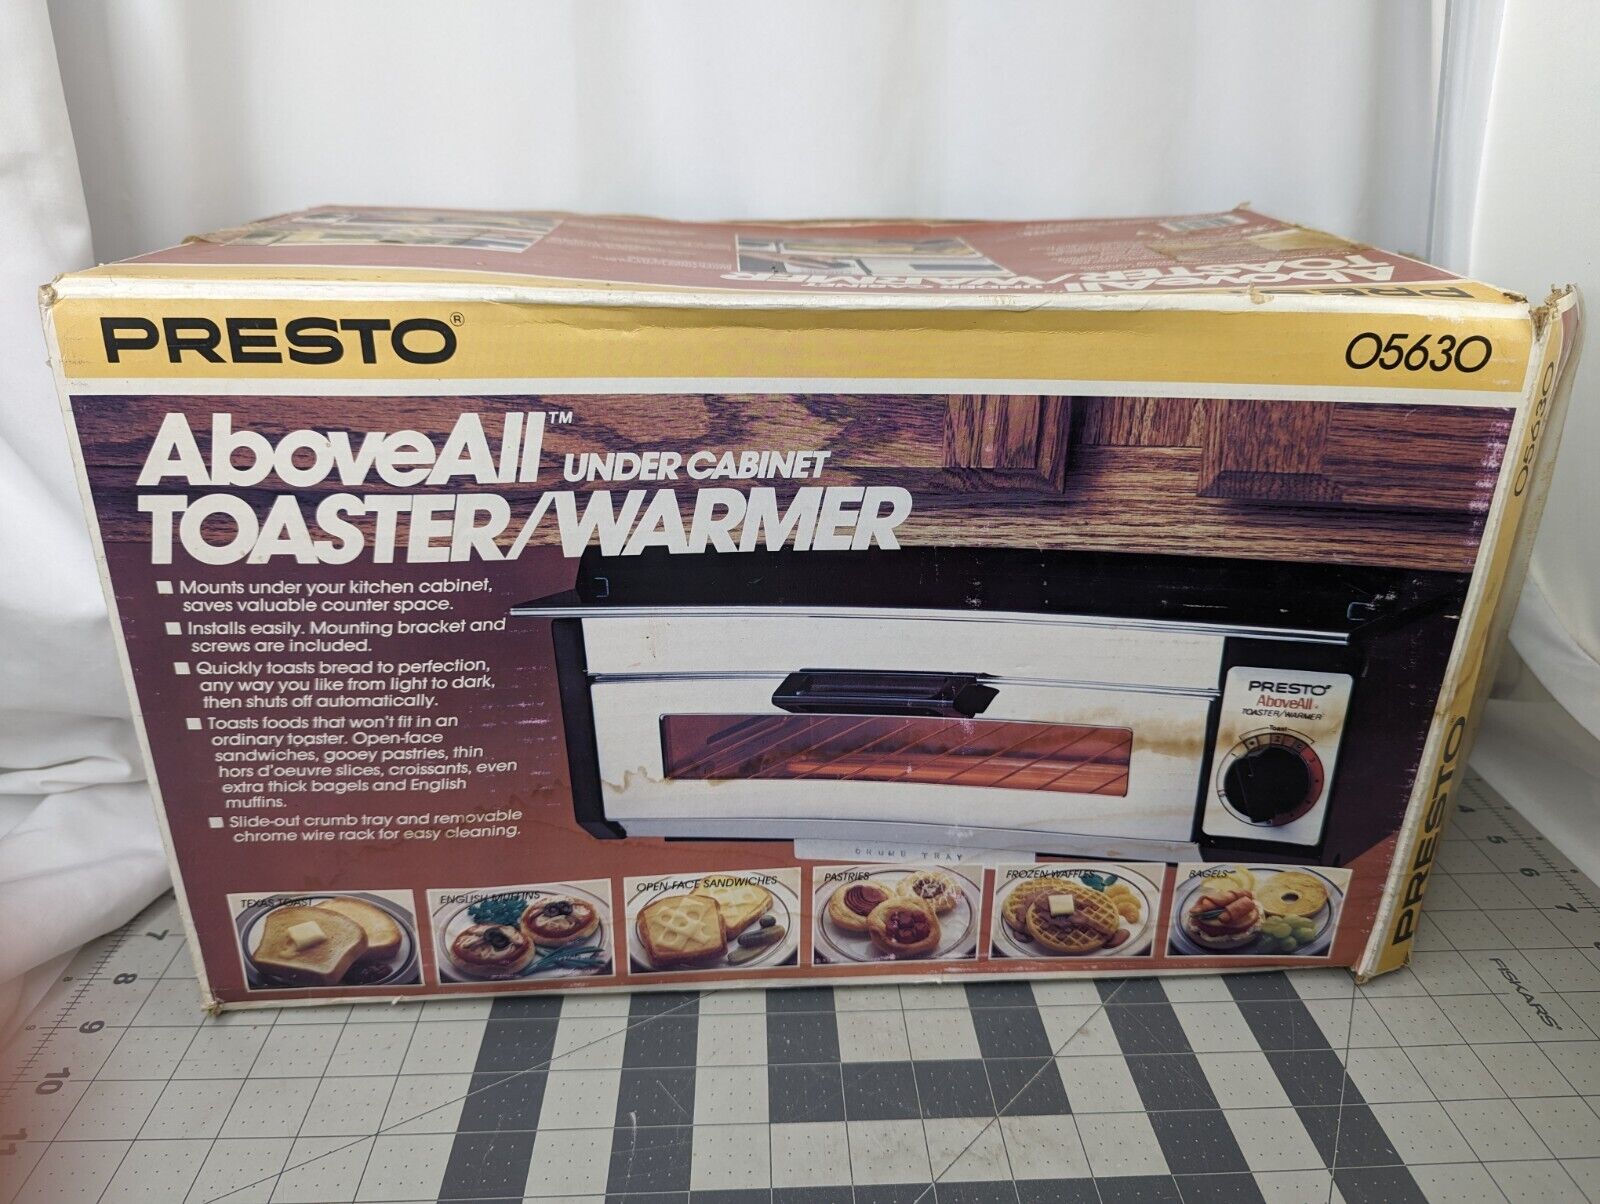 Vintage Presto Aboveall Toaster Warmer Oven 05630 Under Cabinet